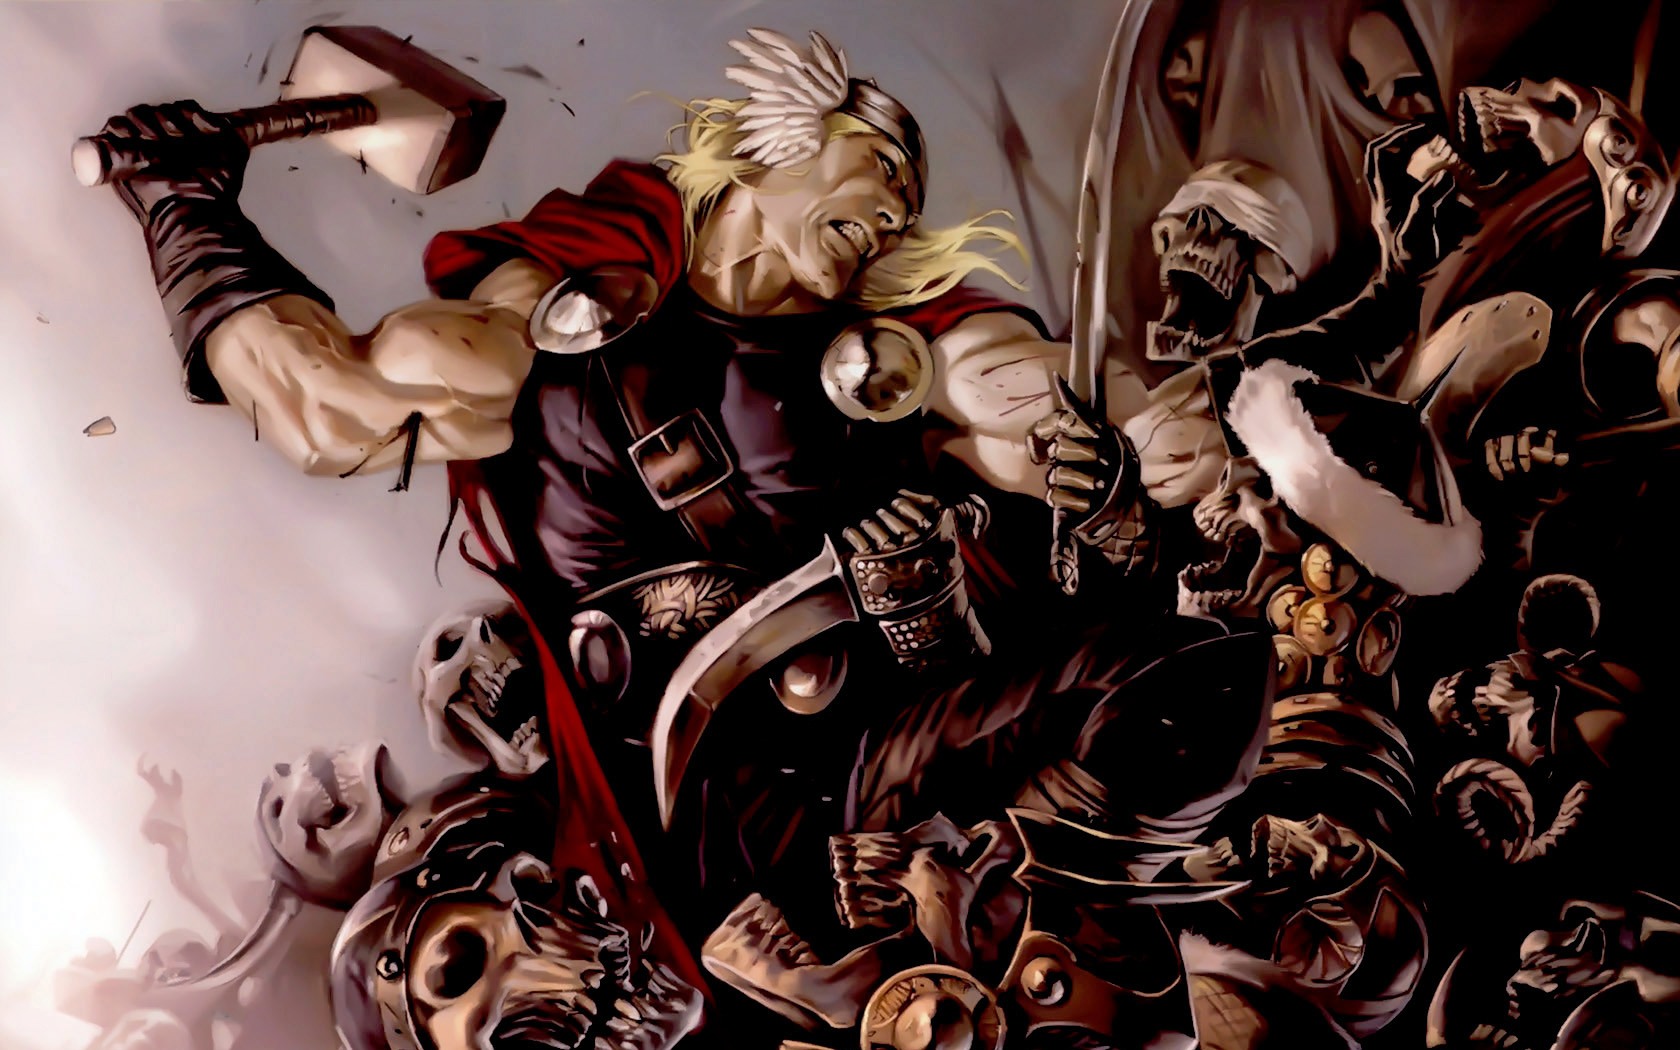 The Avengers (Thor)